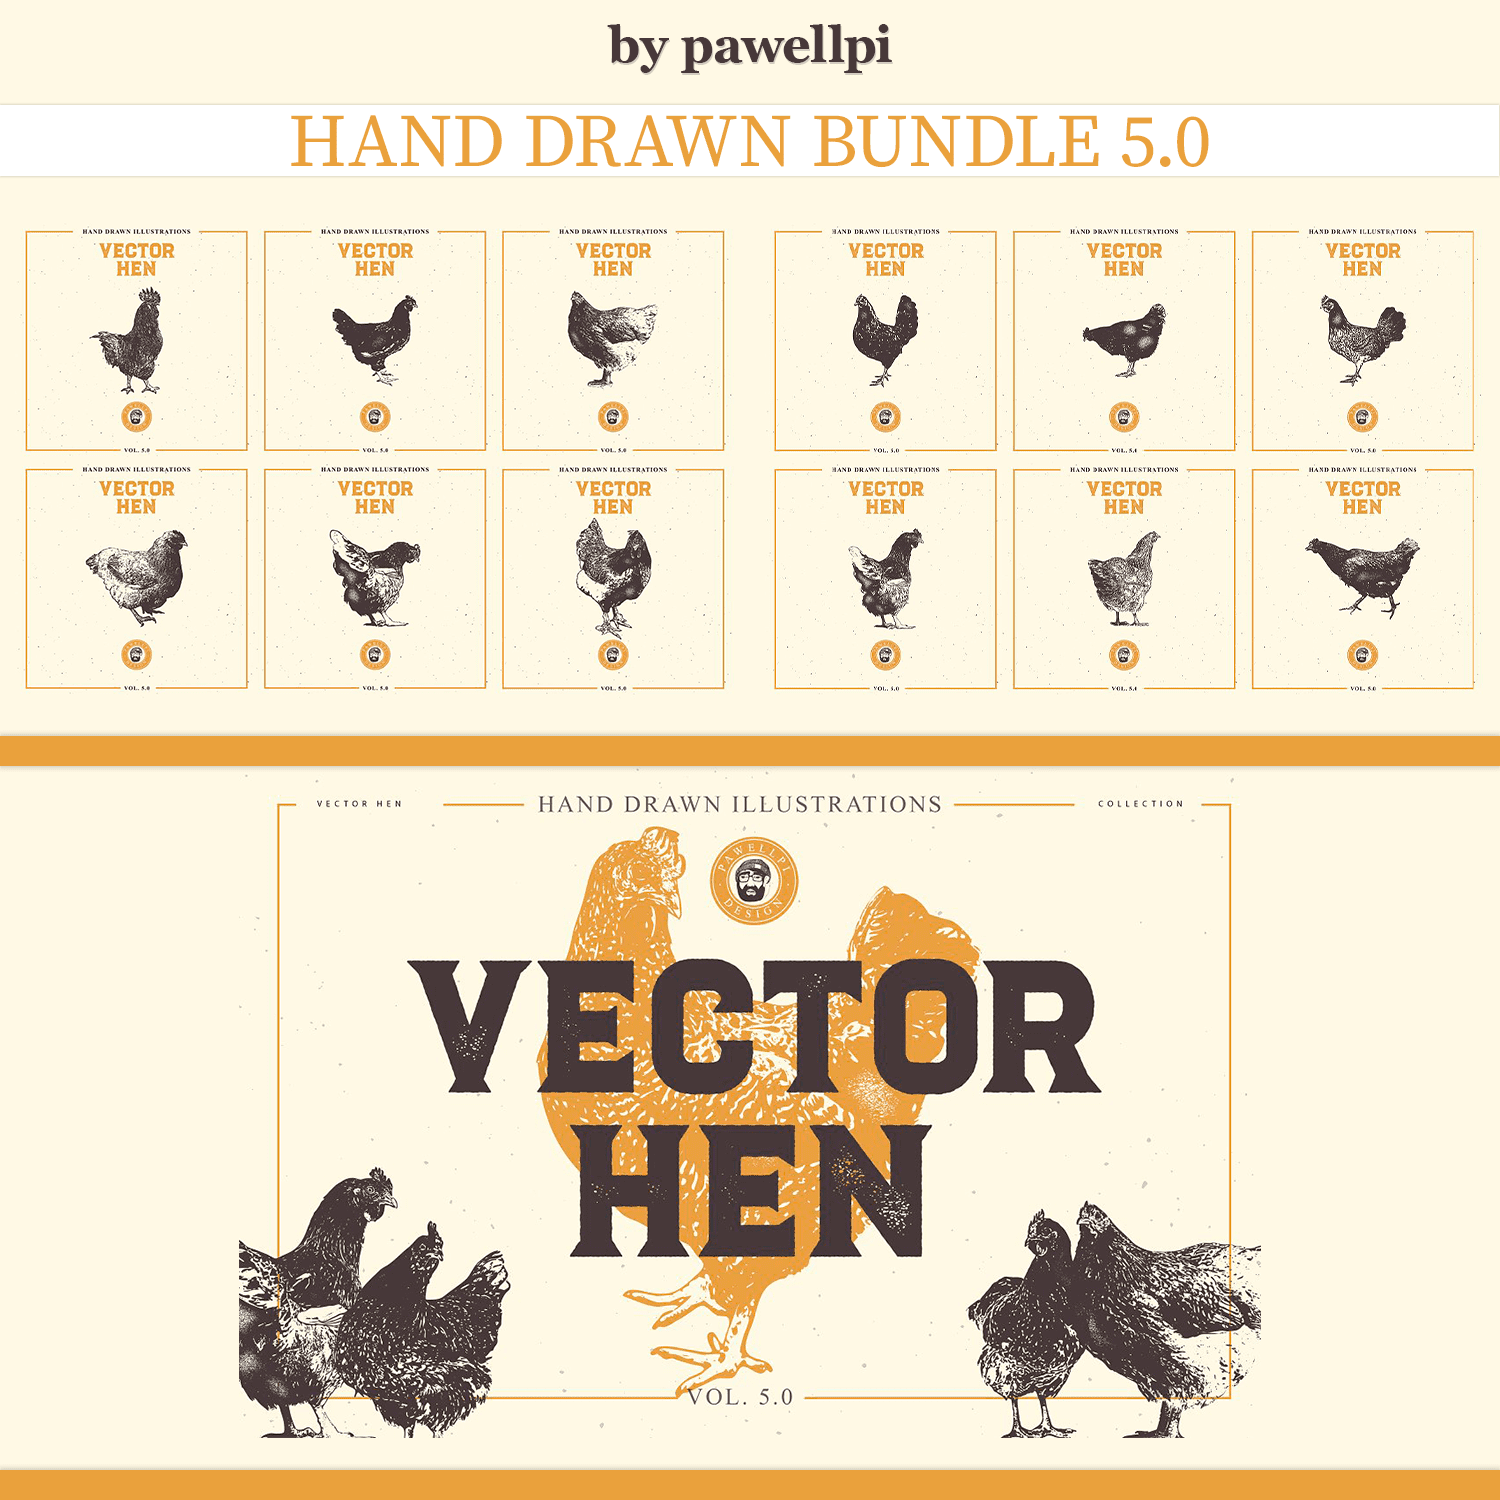 VECTOR HEN HAND DRAWN BUNDLE 5.0 cover.